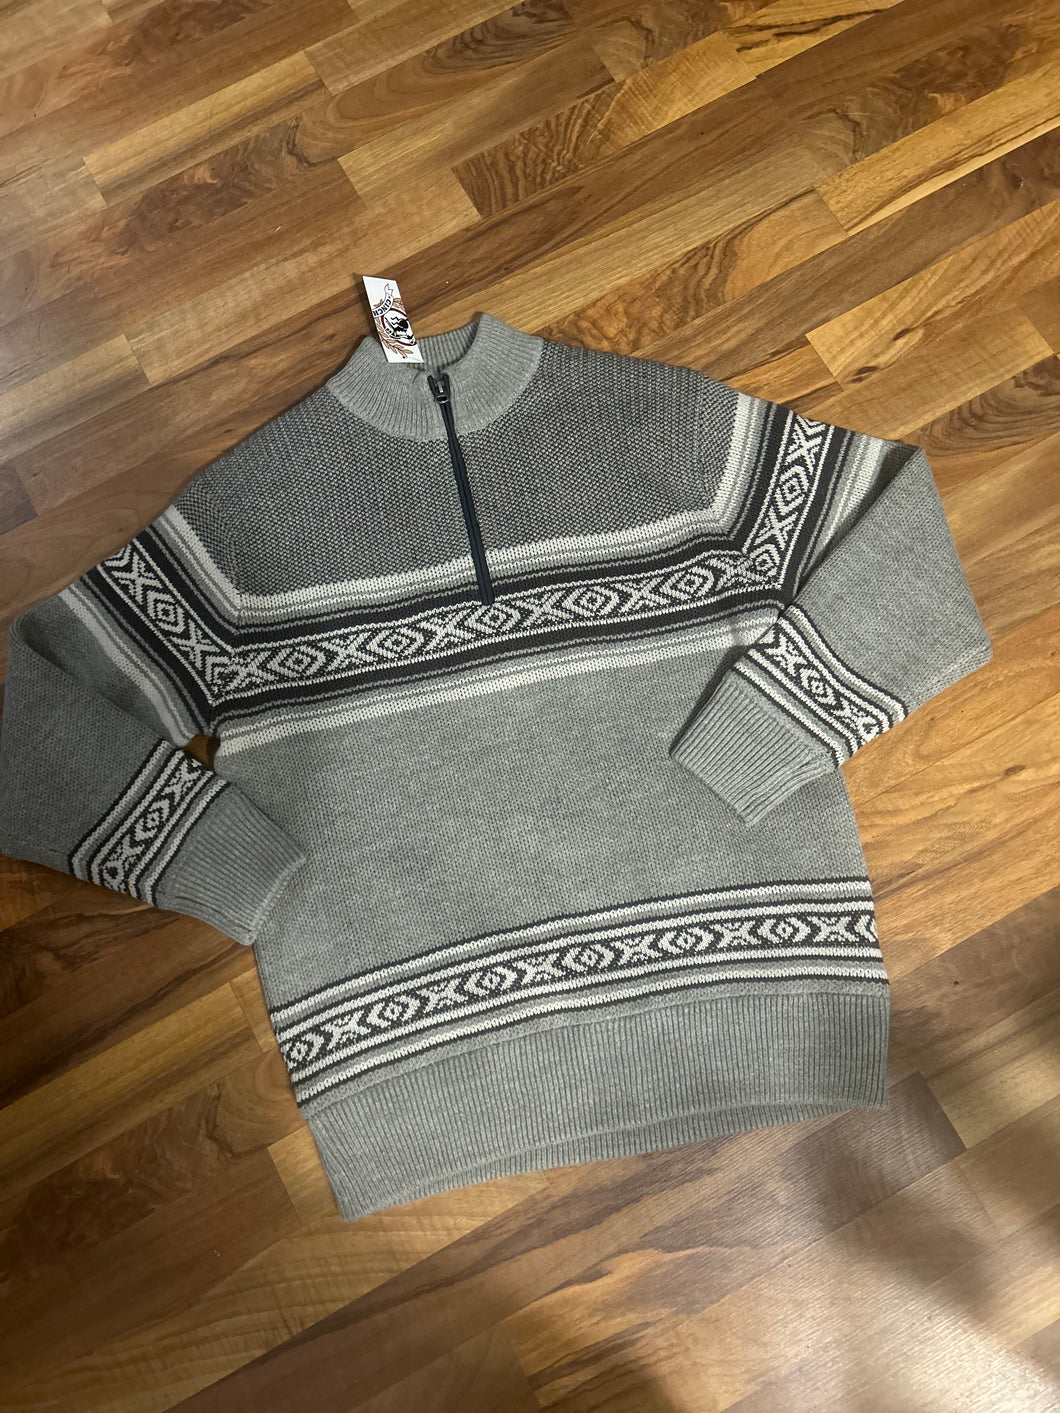 Men’s sweater